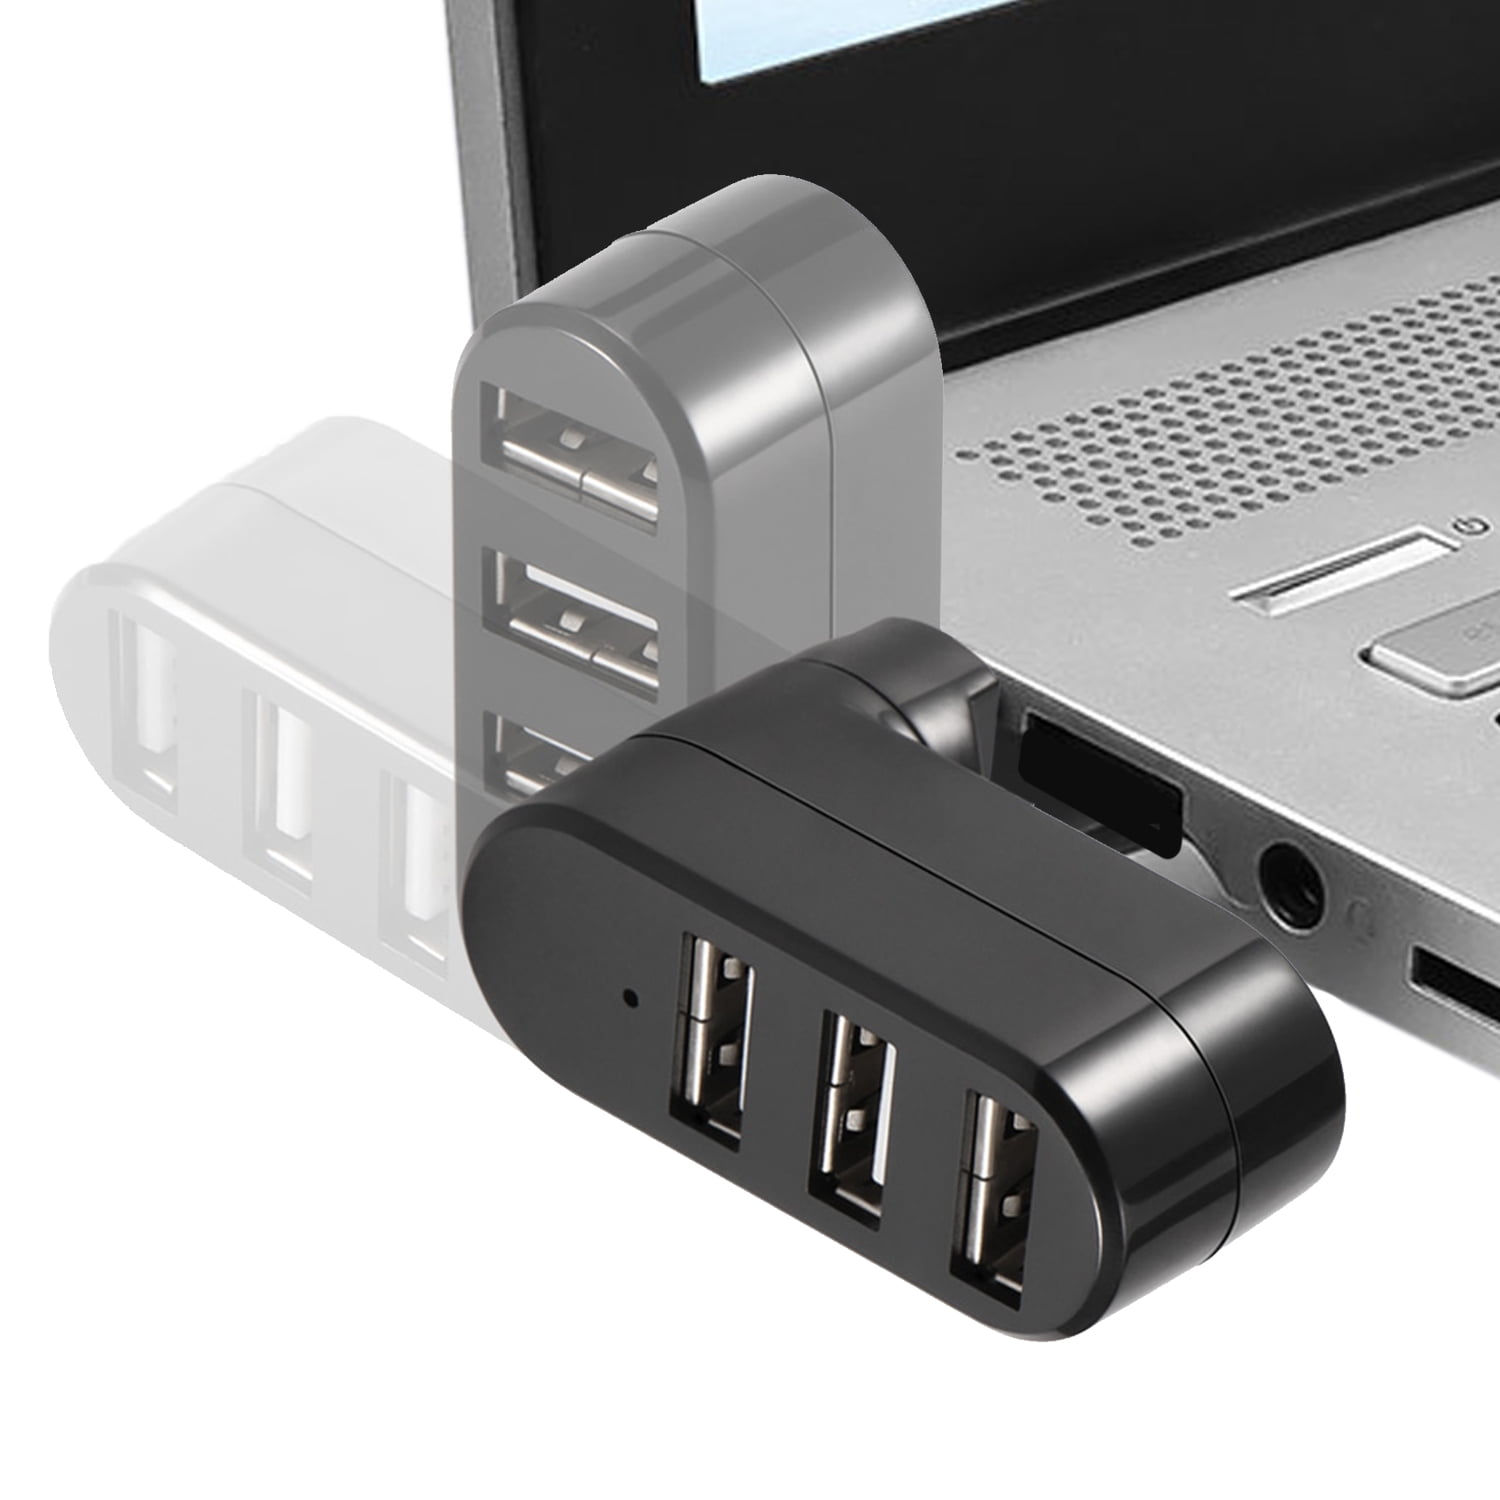 3 Ports Hub Splitter Adapter USB 2.0 Mini Rotate for Laptop PC Notebook Good 